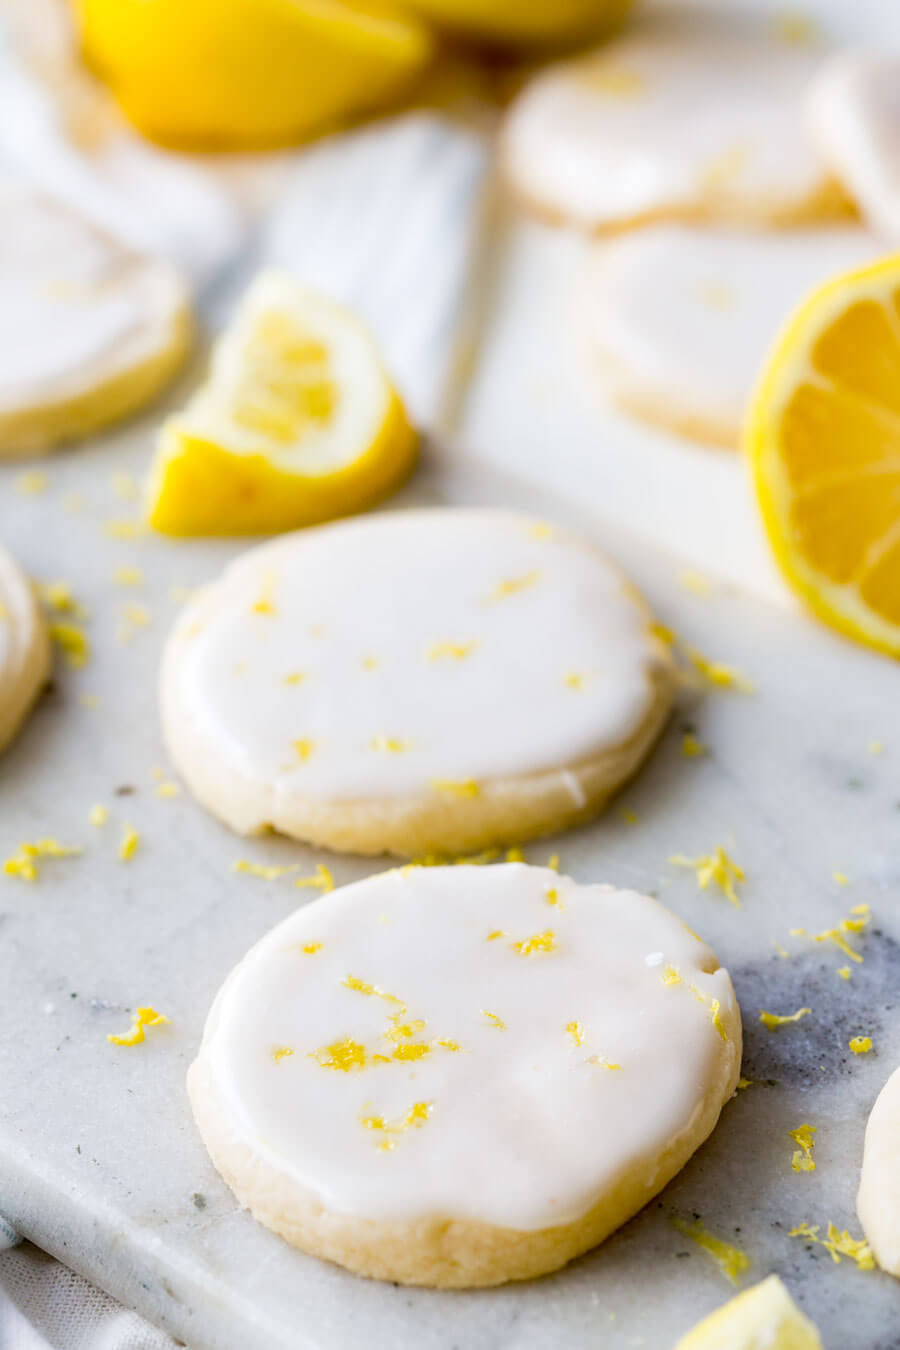 Lemon shortbread cookies are a light and buttery shortbread with a vibrant lemon flavor